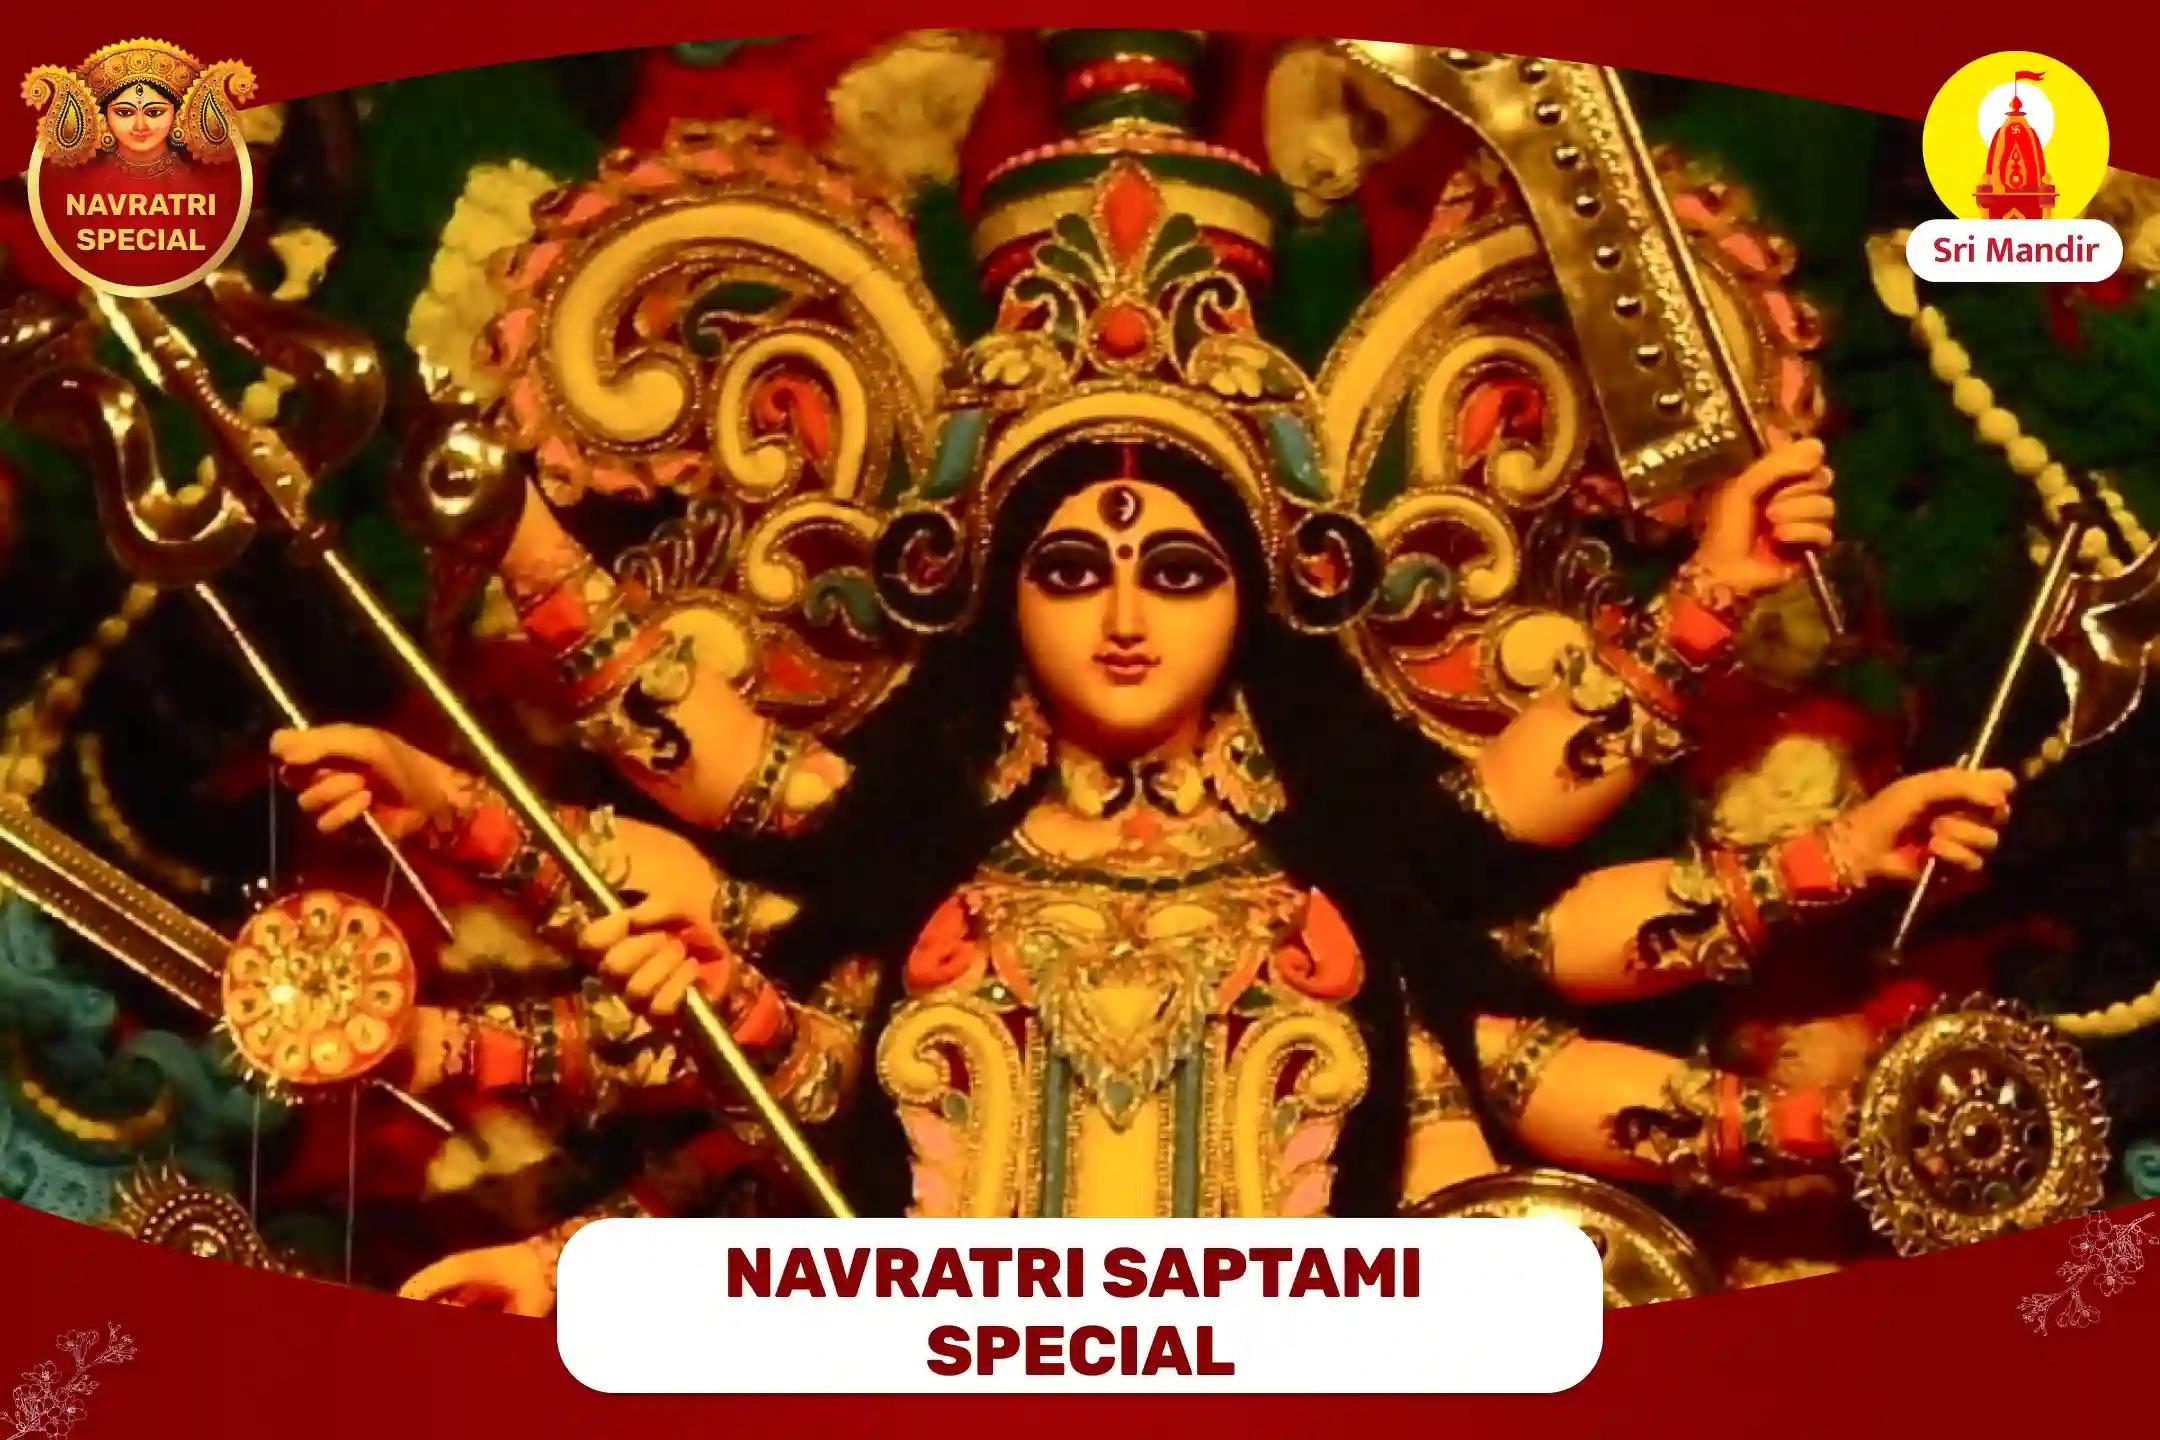 Navratri Saptami Special Adishakti Abhishekatmak Mahapuja and Nav Durga Yagya for Strength, Protection, and Fulfilment of Desires